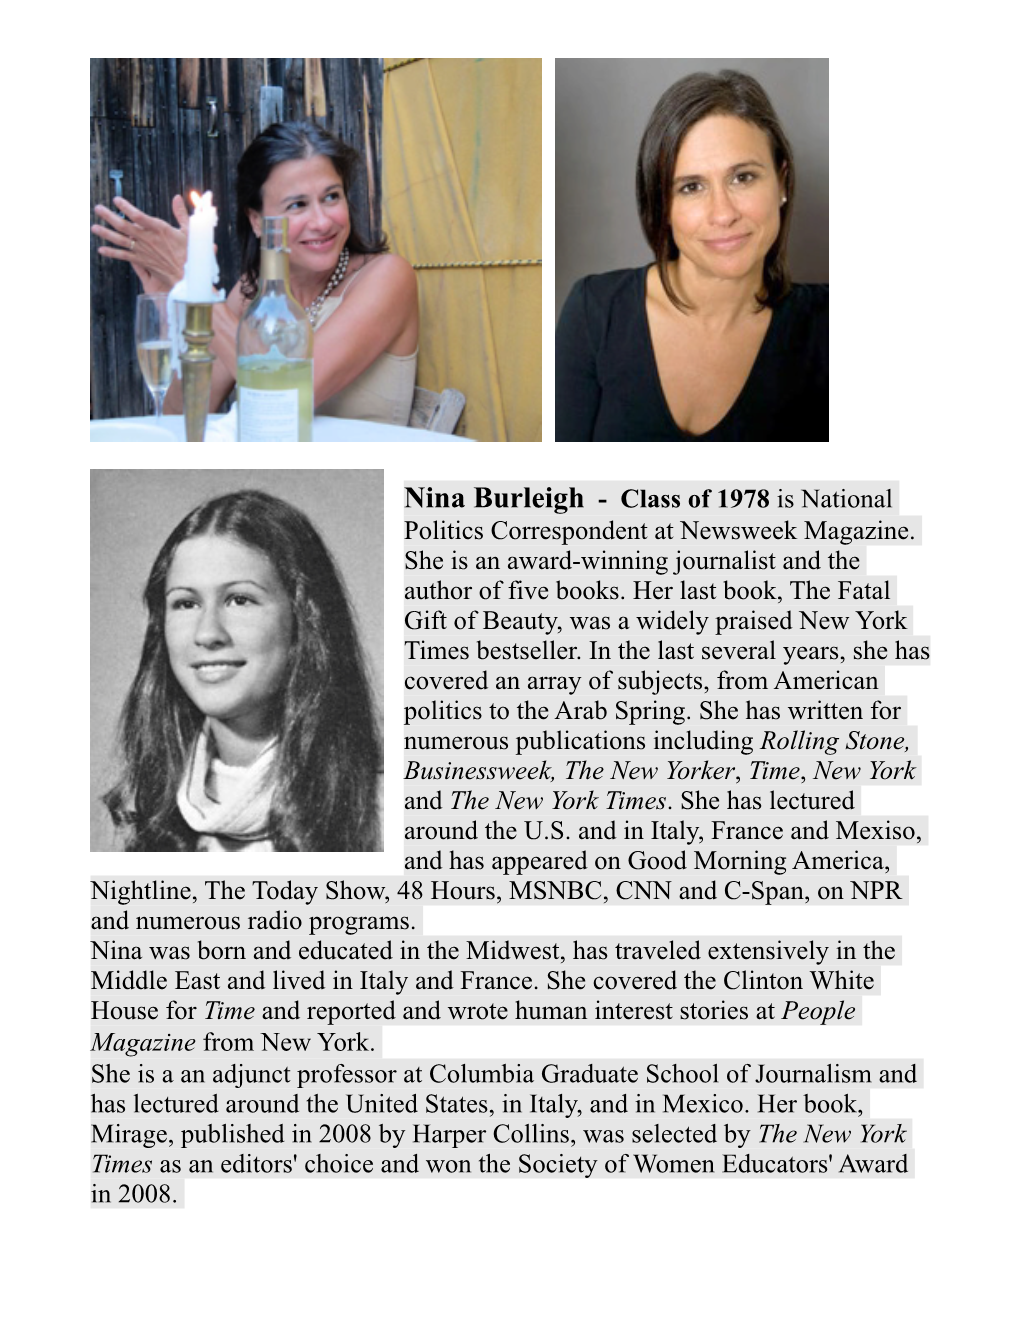 Nina Burleigh - Class of 1978 Is National Politics Correspondent at Newsweek Magazine